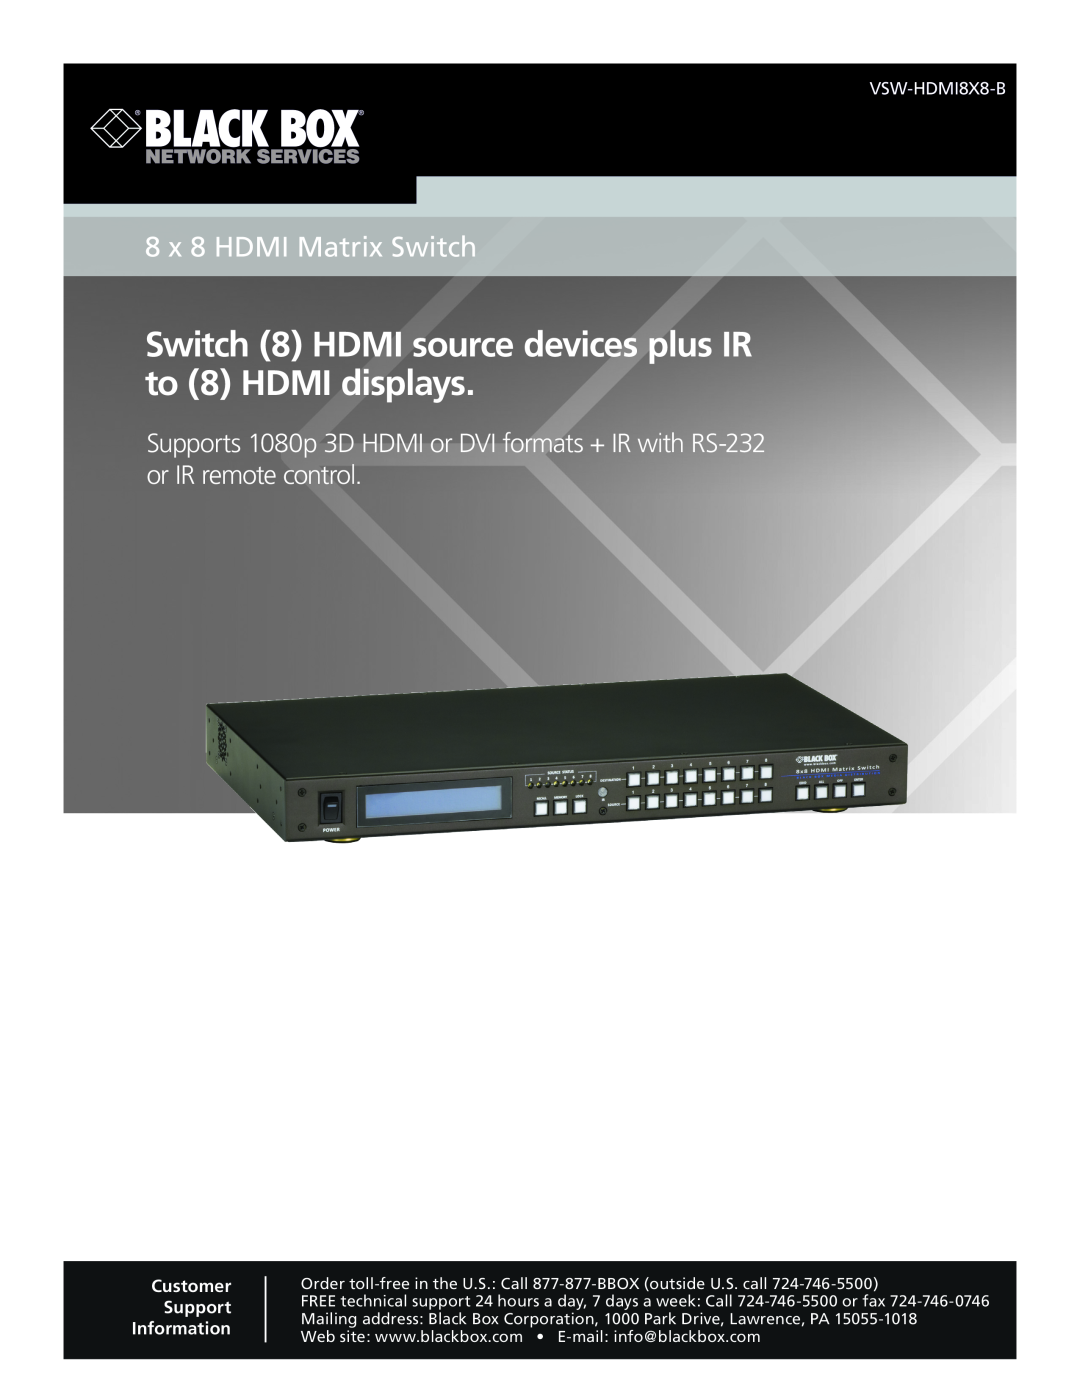 Black Box 8 x 8 HDMI Matrix Switch manual VSW-HDMI8X8-B, Customer Support Information 